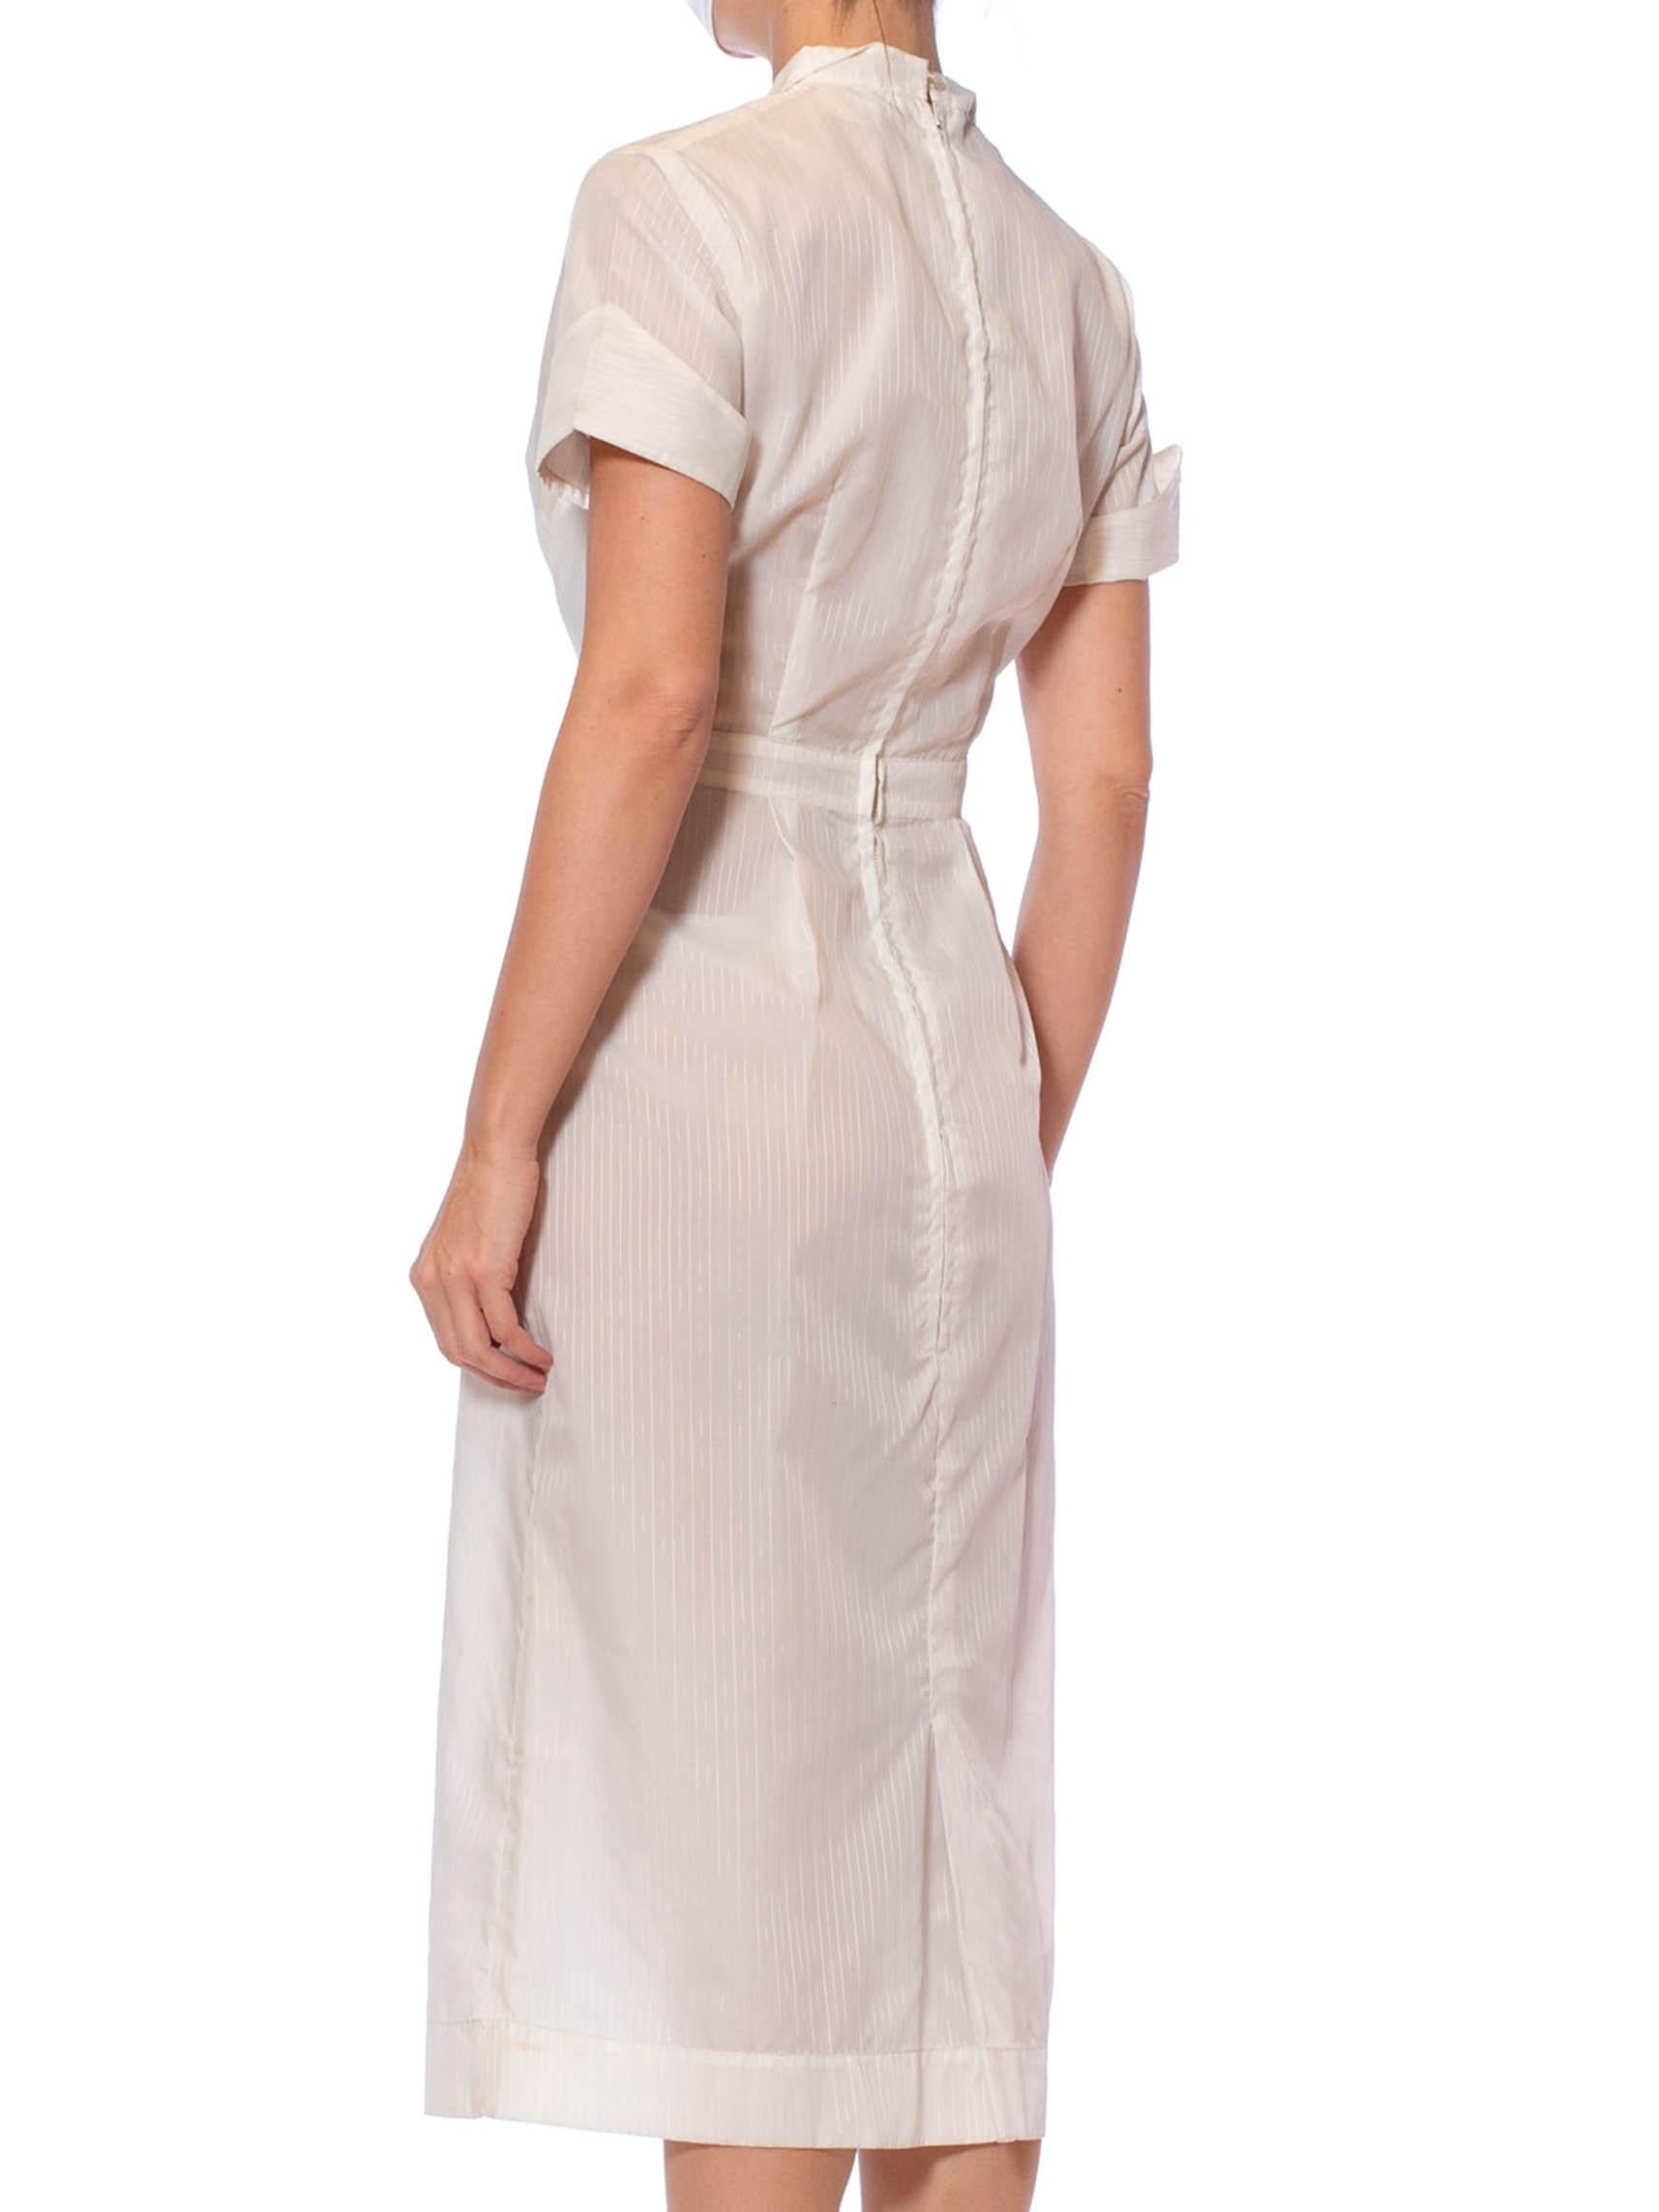 1950S White Nylon Pin-Up Nurse Uniform Dress 1